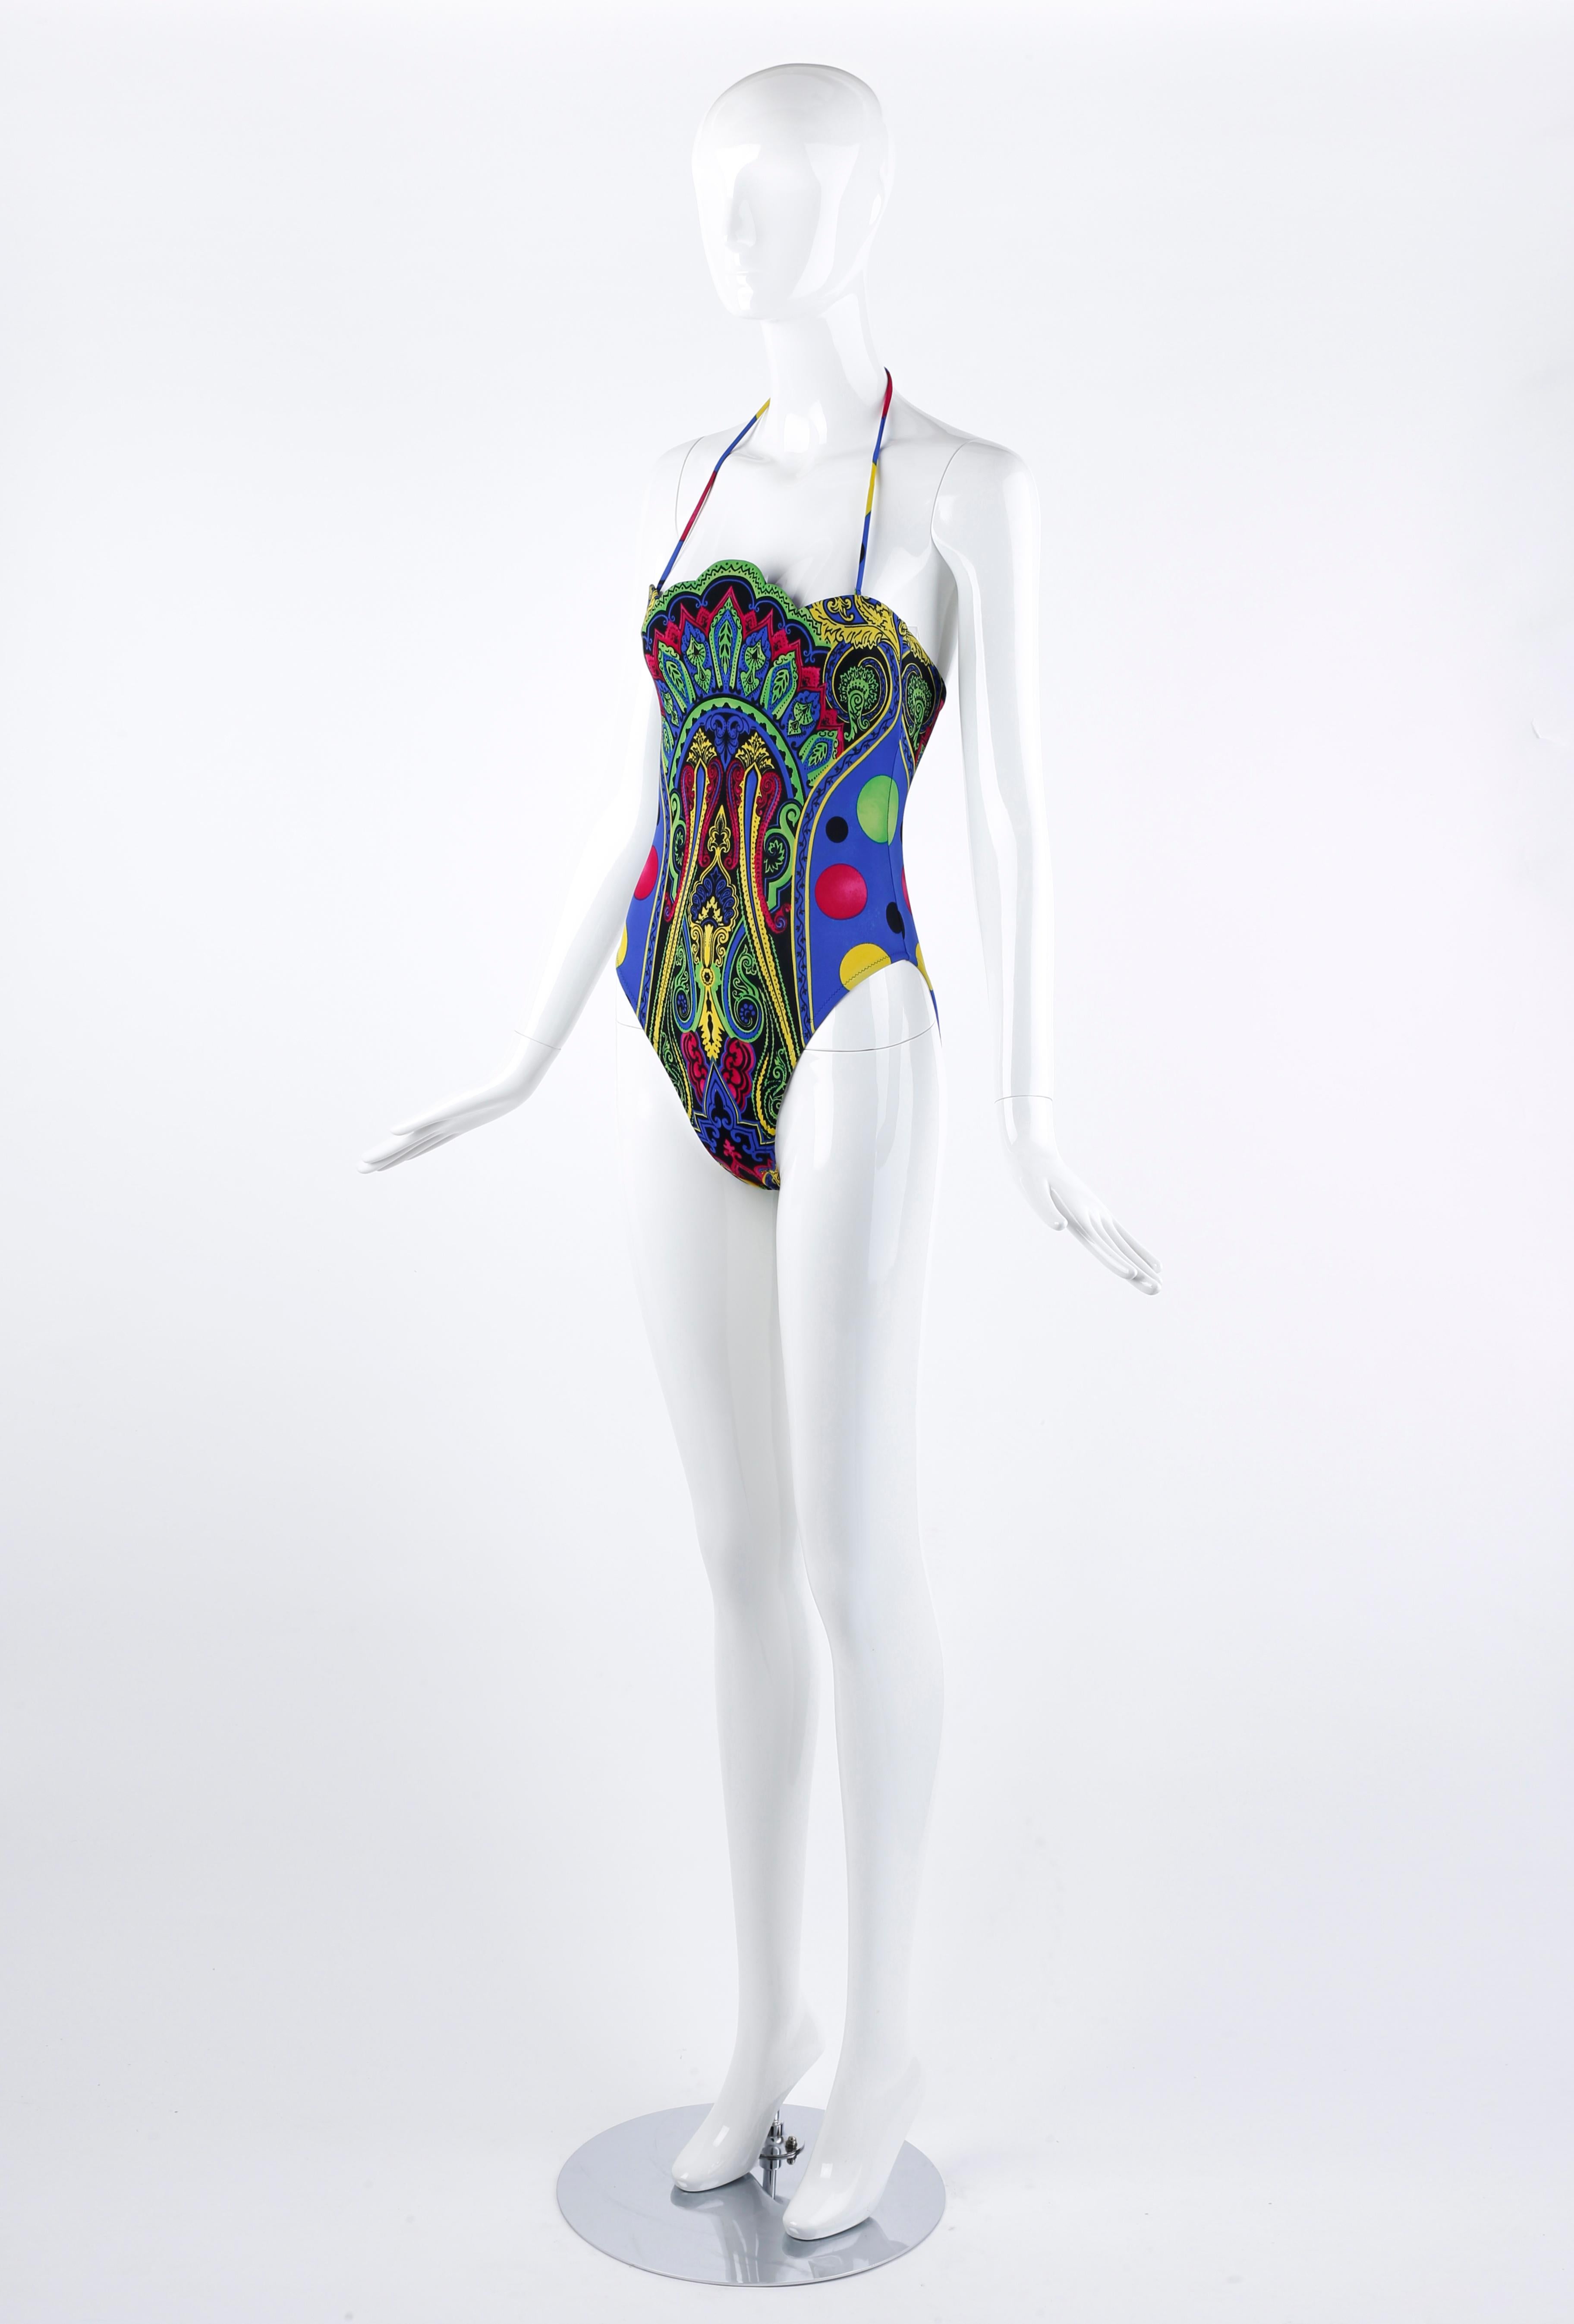 Gianni Versace S/S 1991 Pop Art Baroque Print Swimsuit Bodysuit & Skirt Set For Sale 2